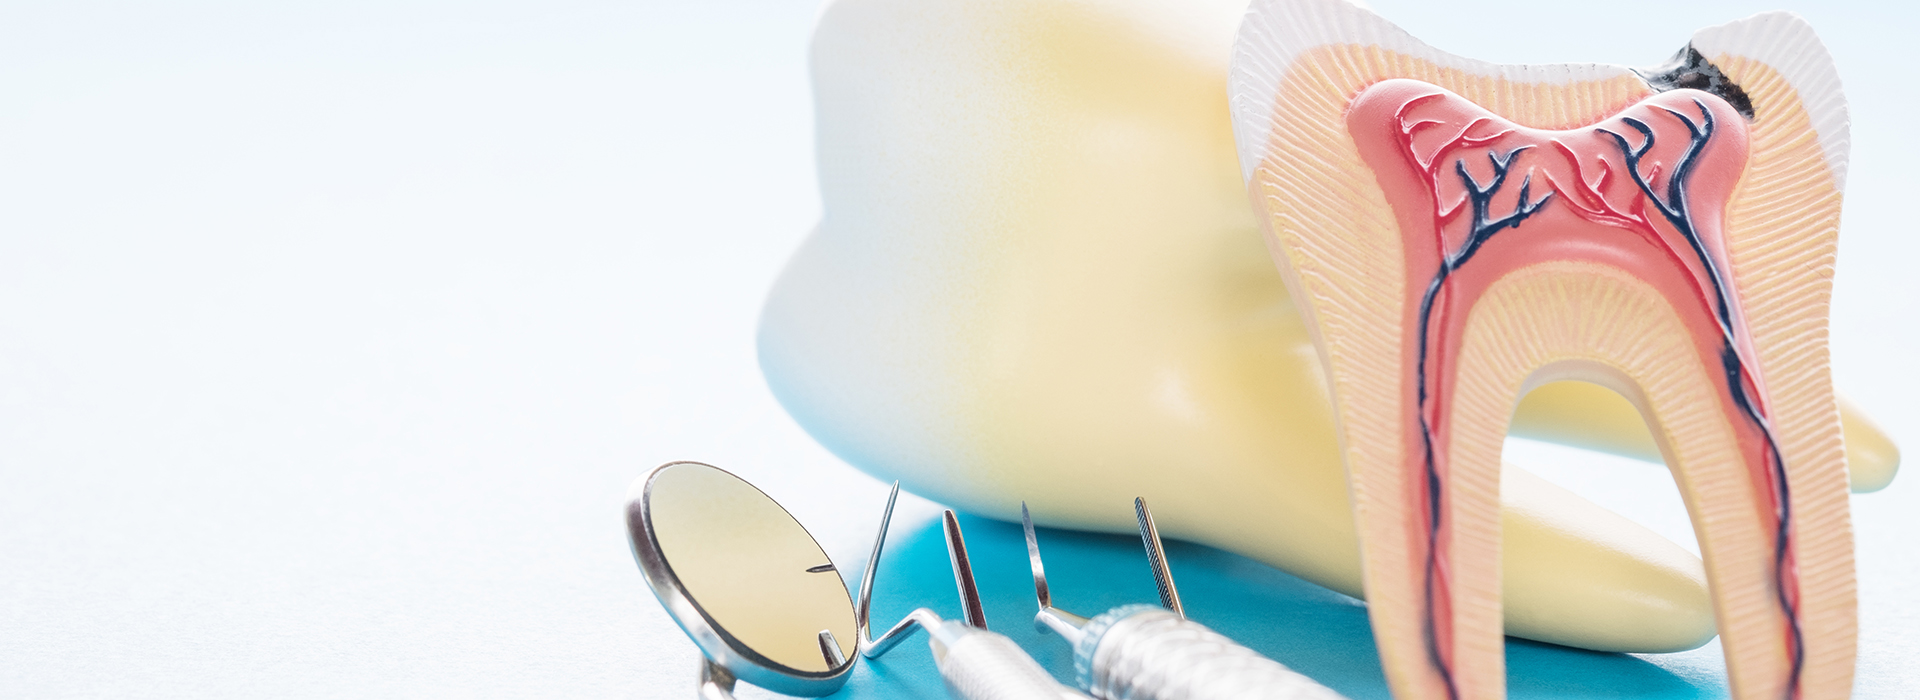 Appleseed Dental | Cosmetic Dentistry, Veneers and Root Canals